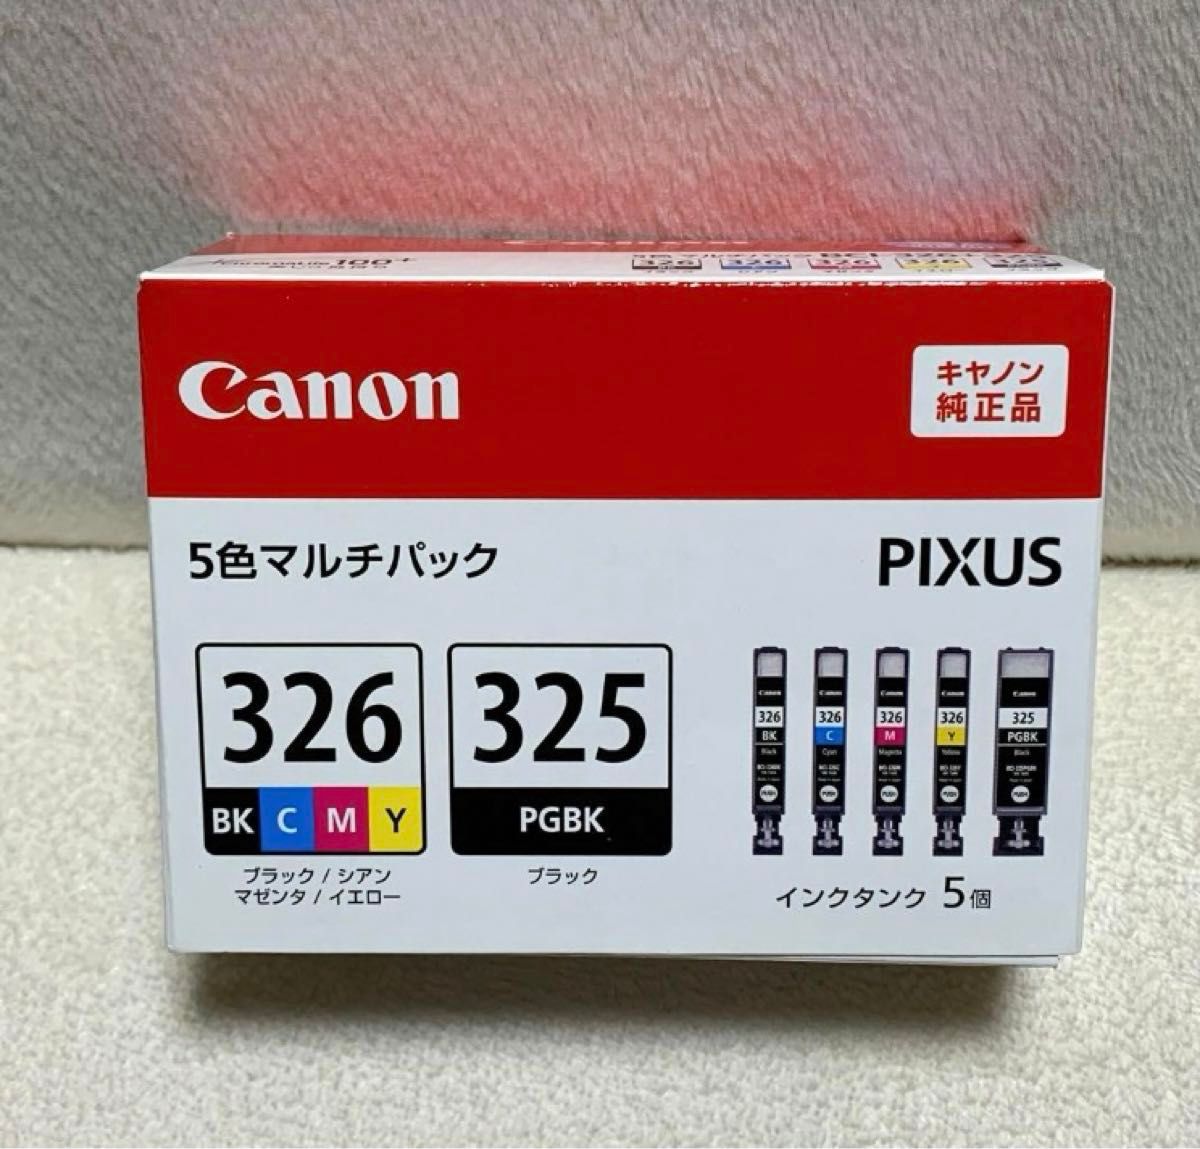 Canon BCI-326+325/5MP